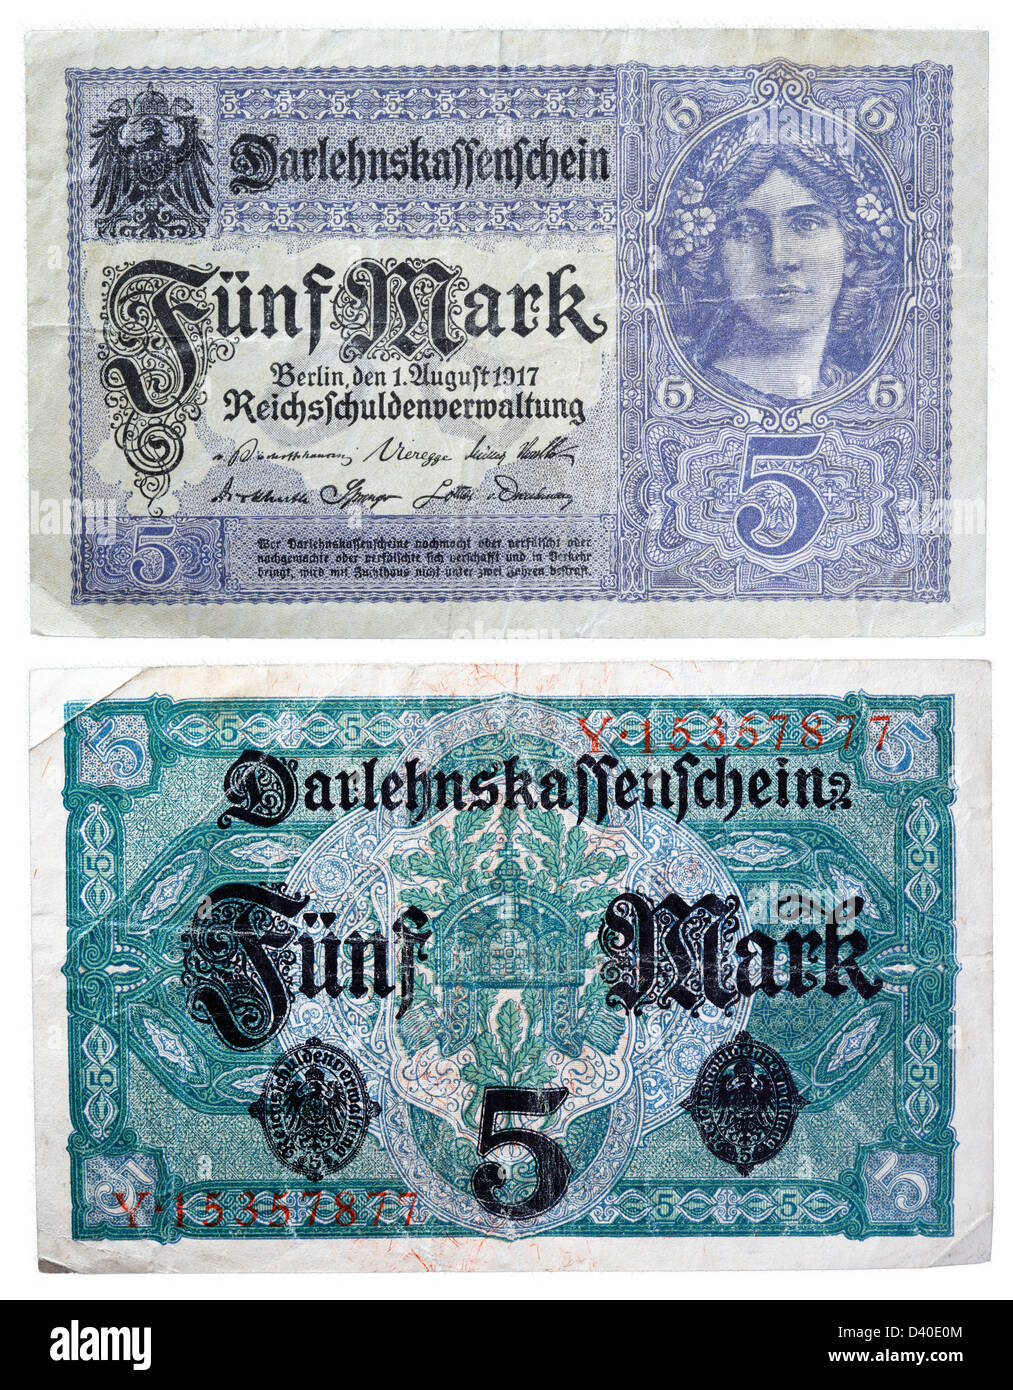 5 Mark banknote, Germany, 1917 Stock Photo